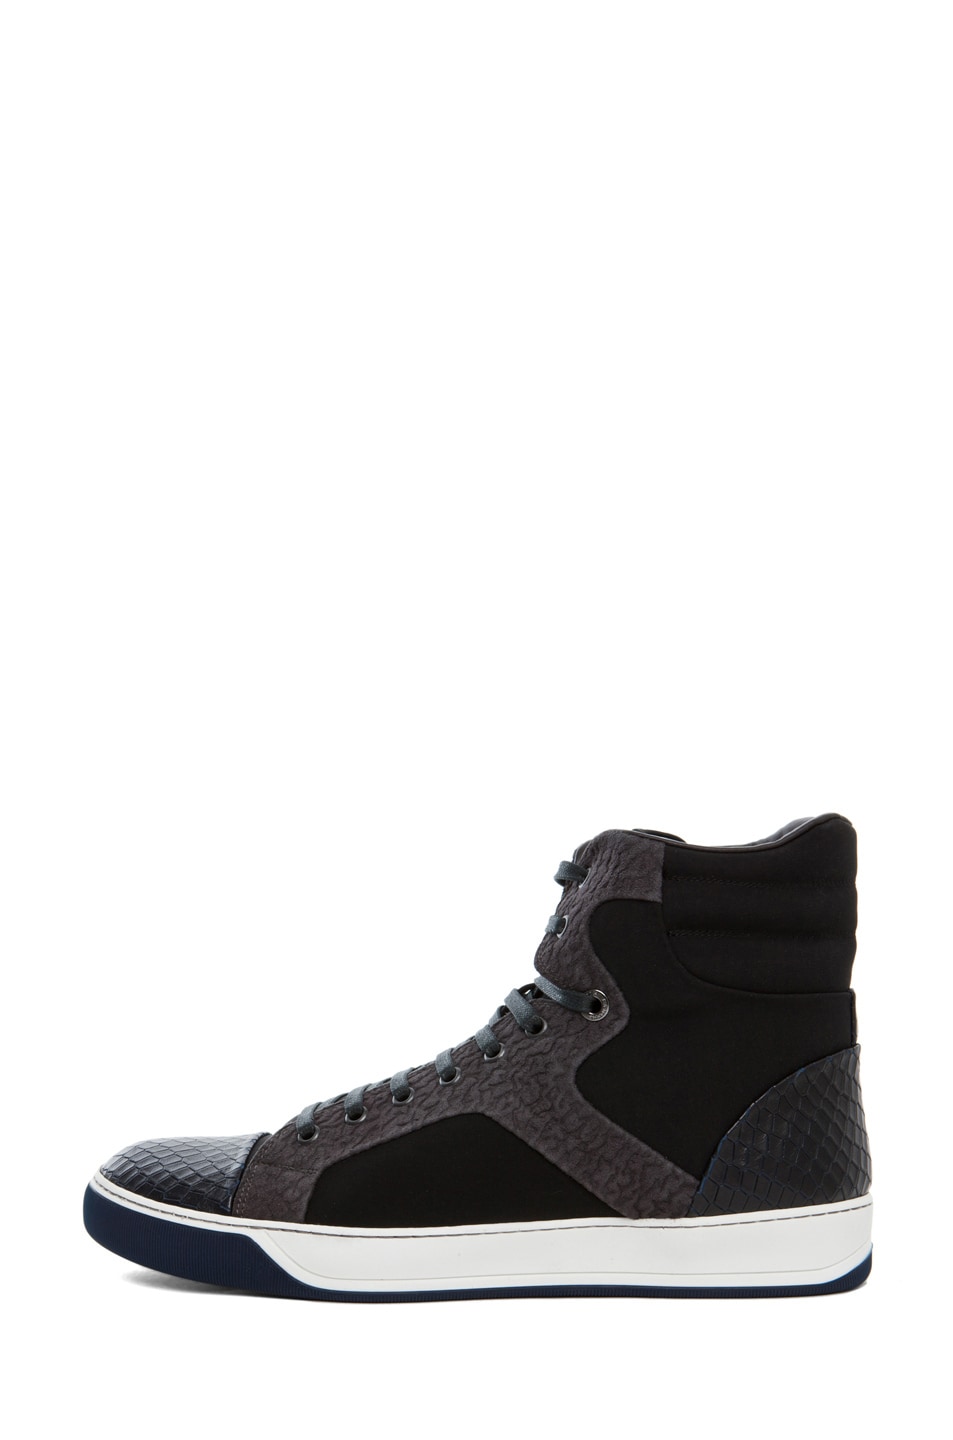 Lanvin High Top Cotton Embossed Sneaker in Black | FWRD